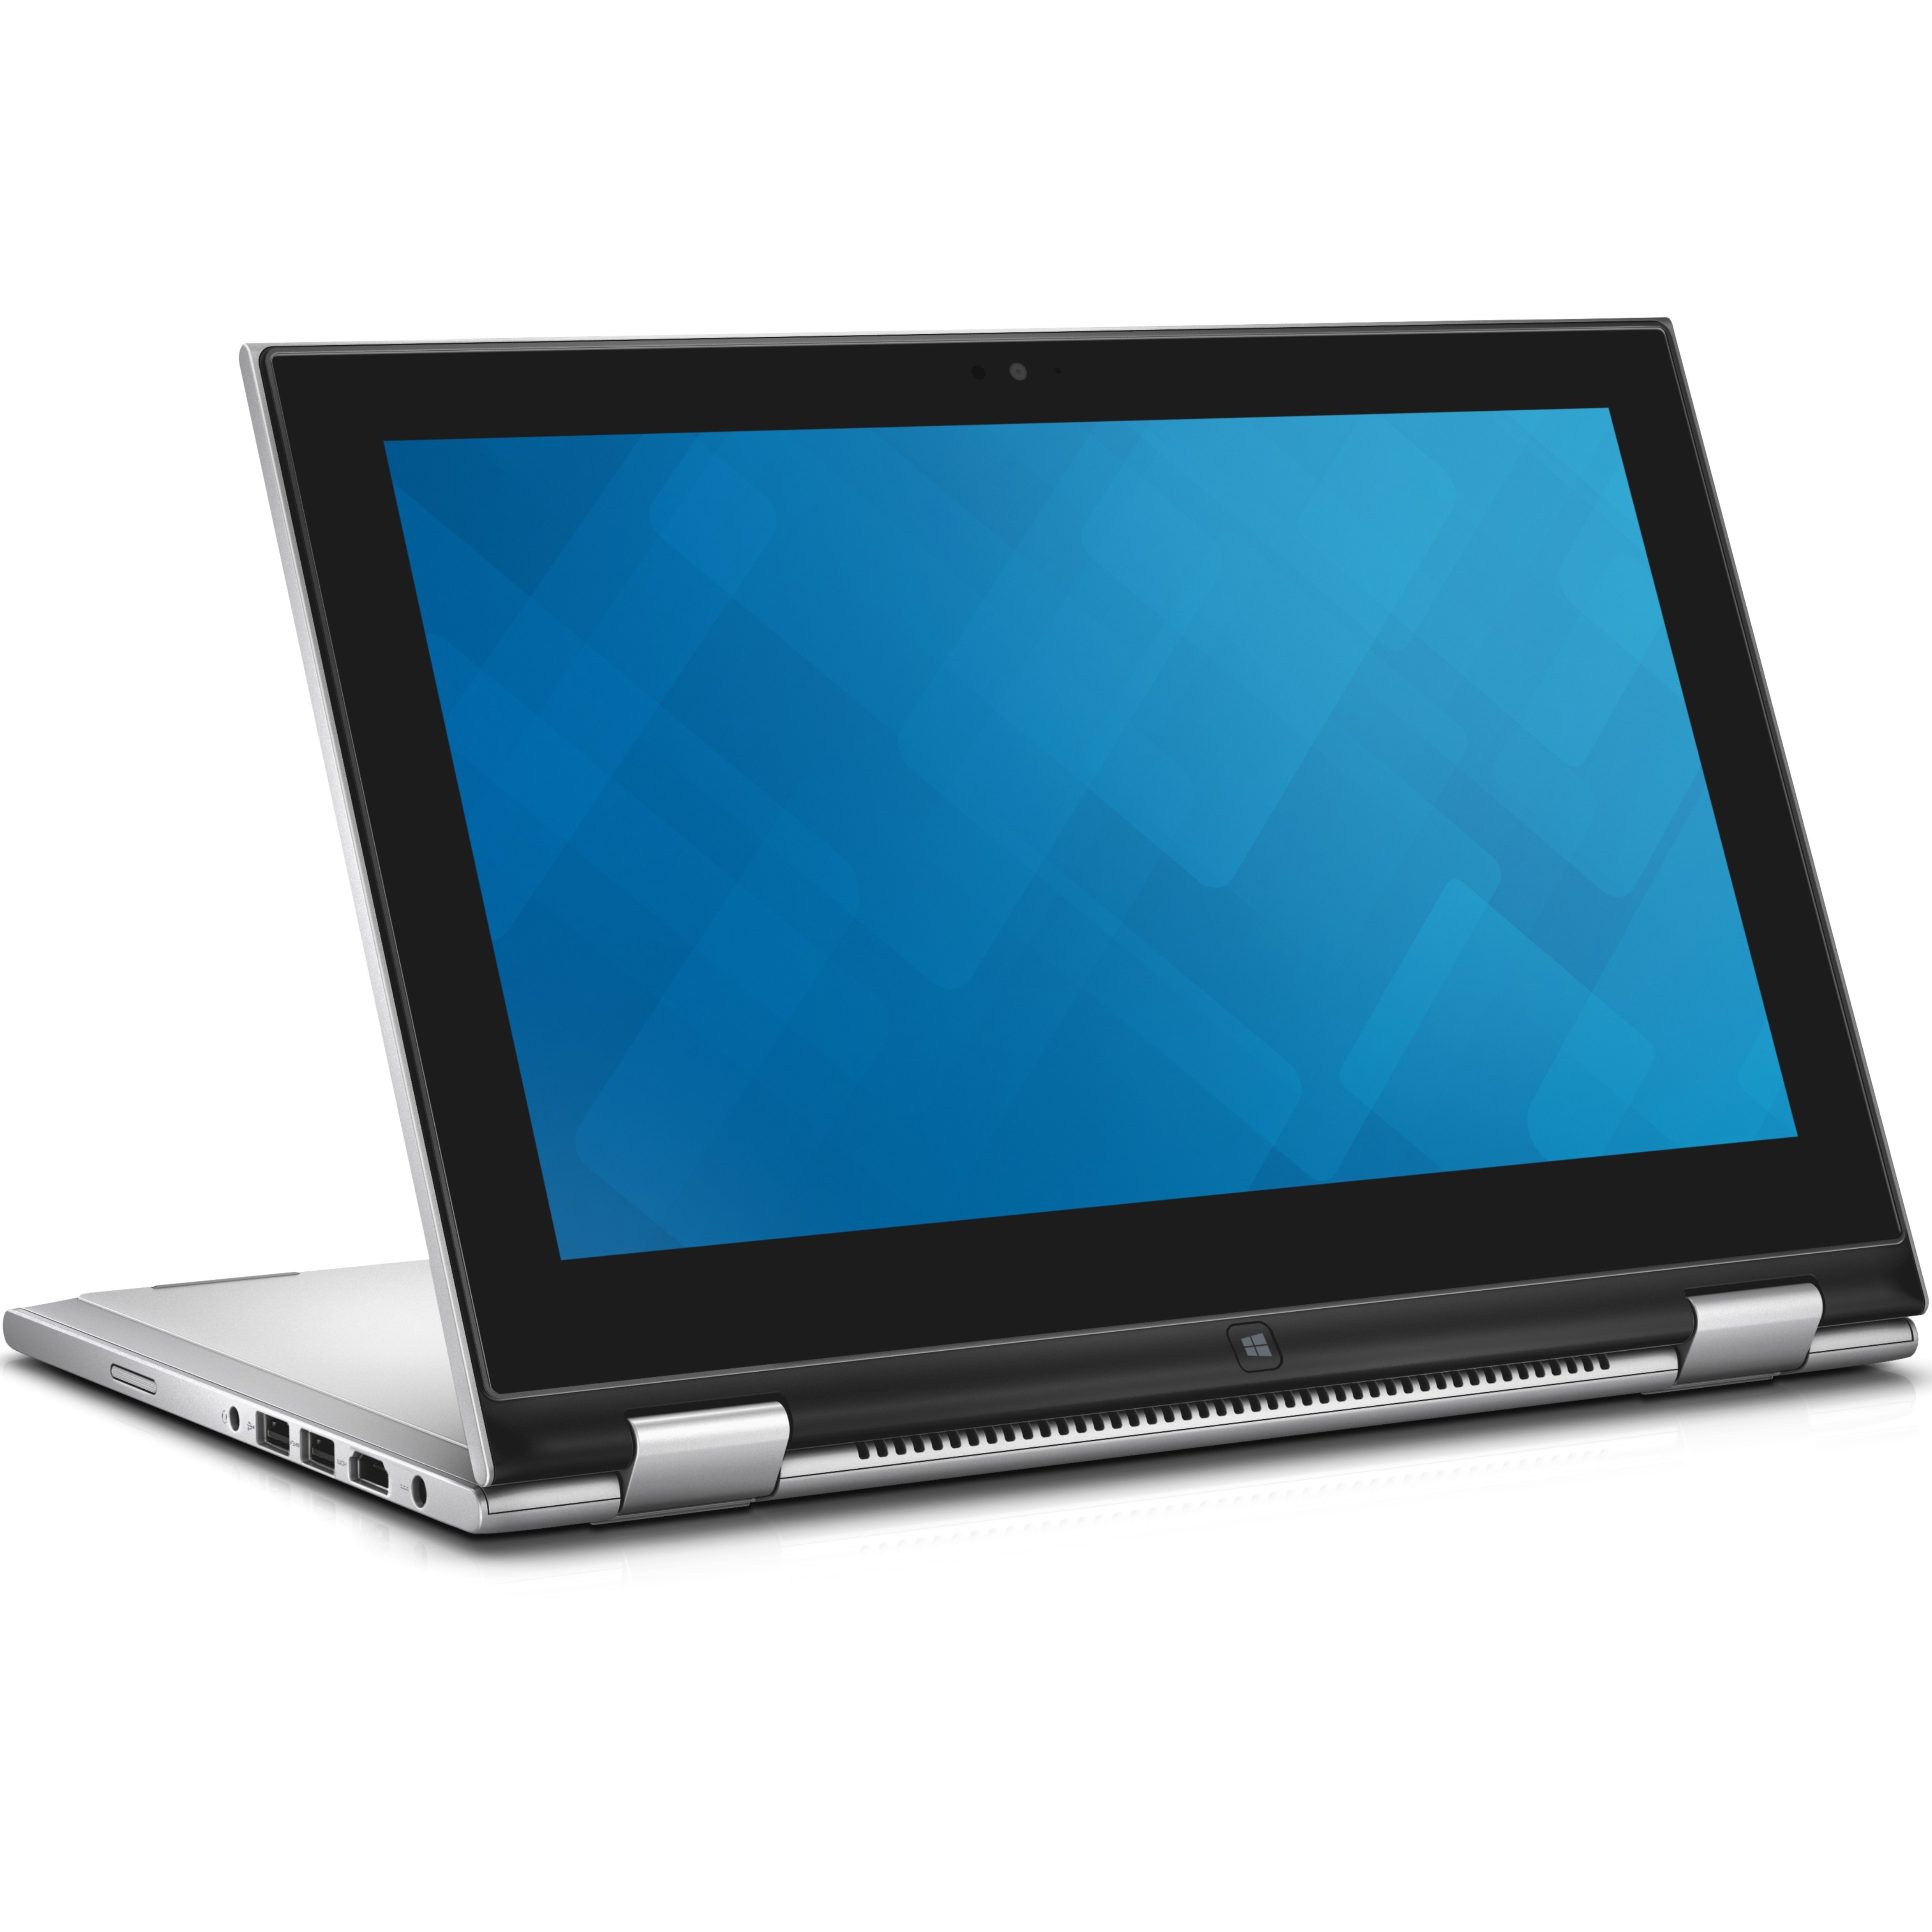 Dell Inspiron 11.6" Touchscreen 2-in-1 Laptop, Intel Pentium N3530, 500GB HD, Windows 8.1, i3147-3750sLV - image 5 of 6